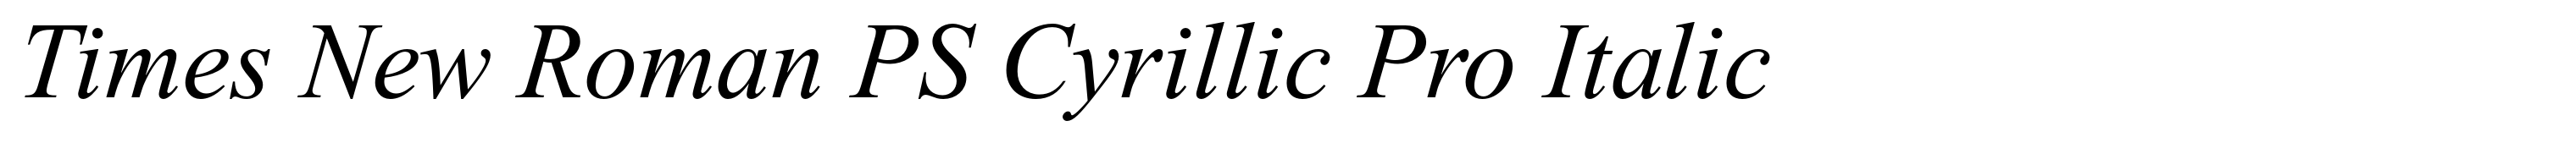 Times New Roman PS Cyrillic Pro Italic